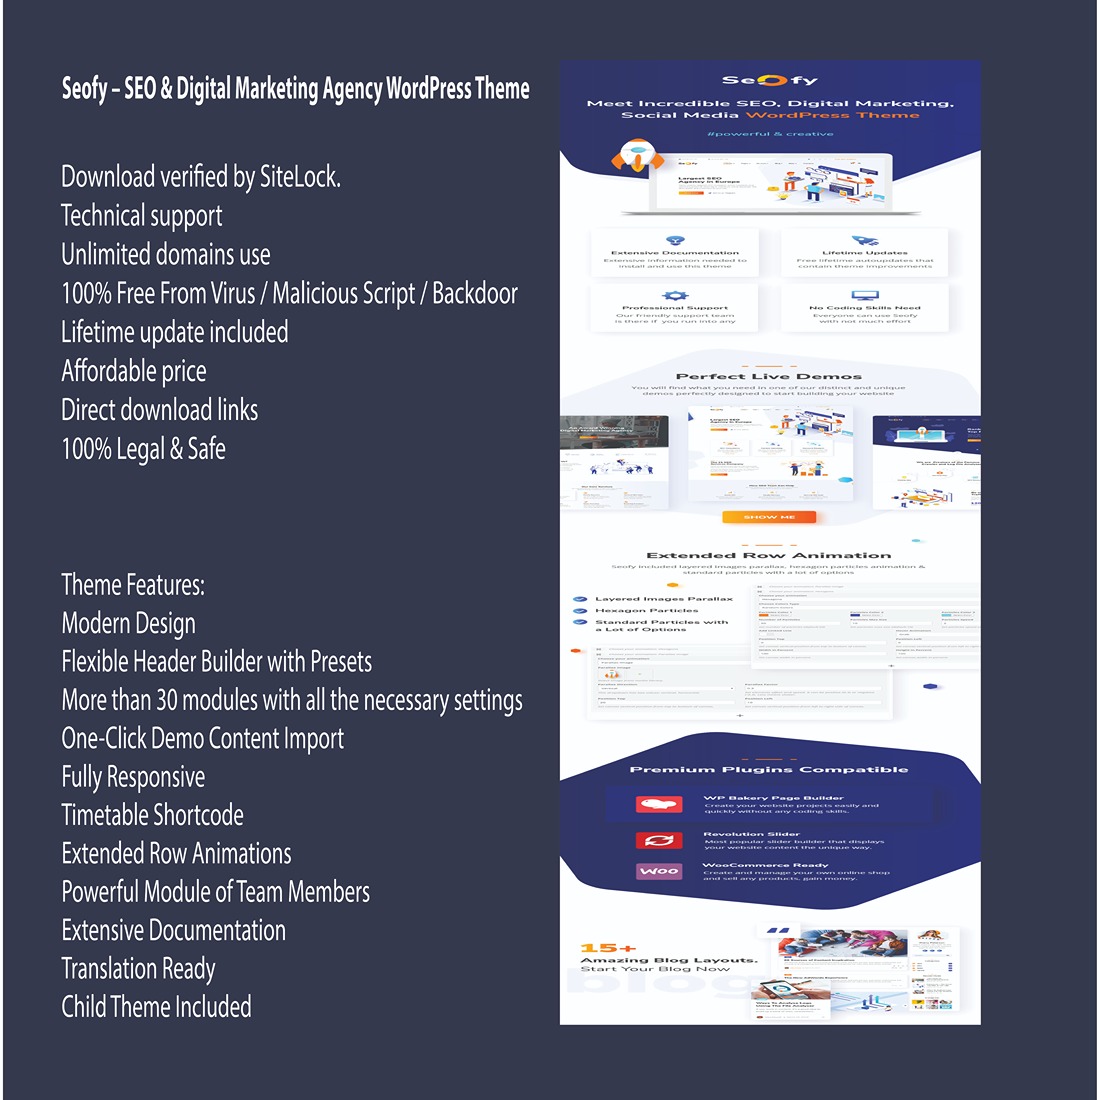 Seofy – SEO & Digital Marketing Agency WordPress Theme preview image.